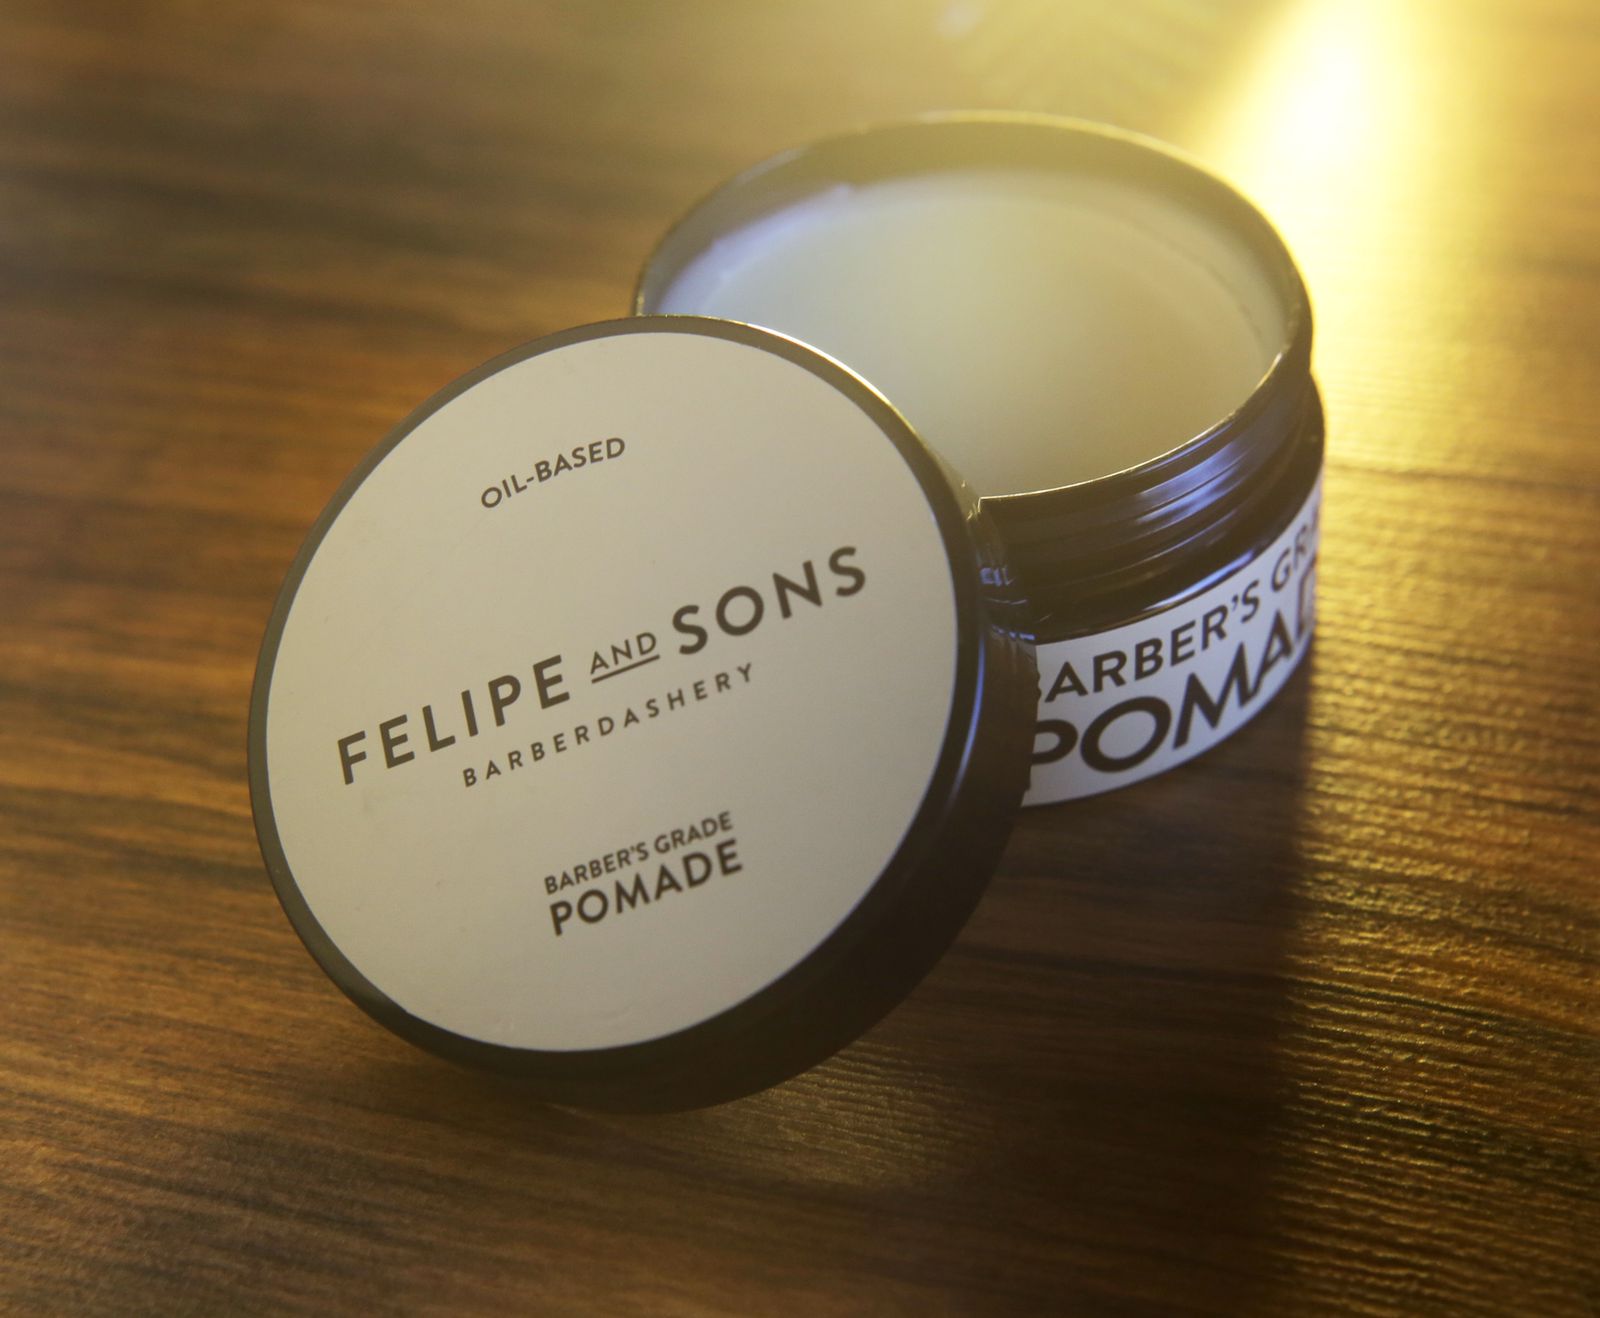 Felipe And Sons ₱1500 PH Gift Card